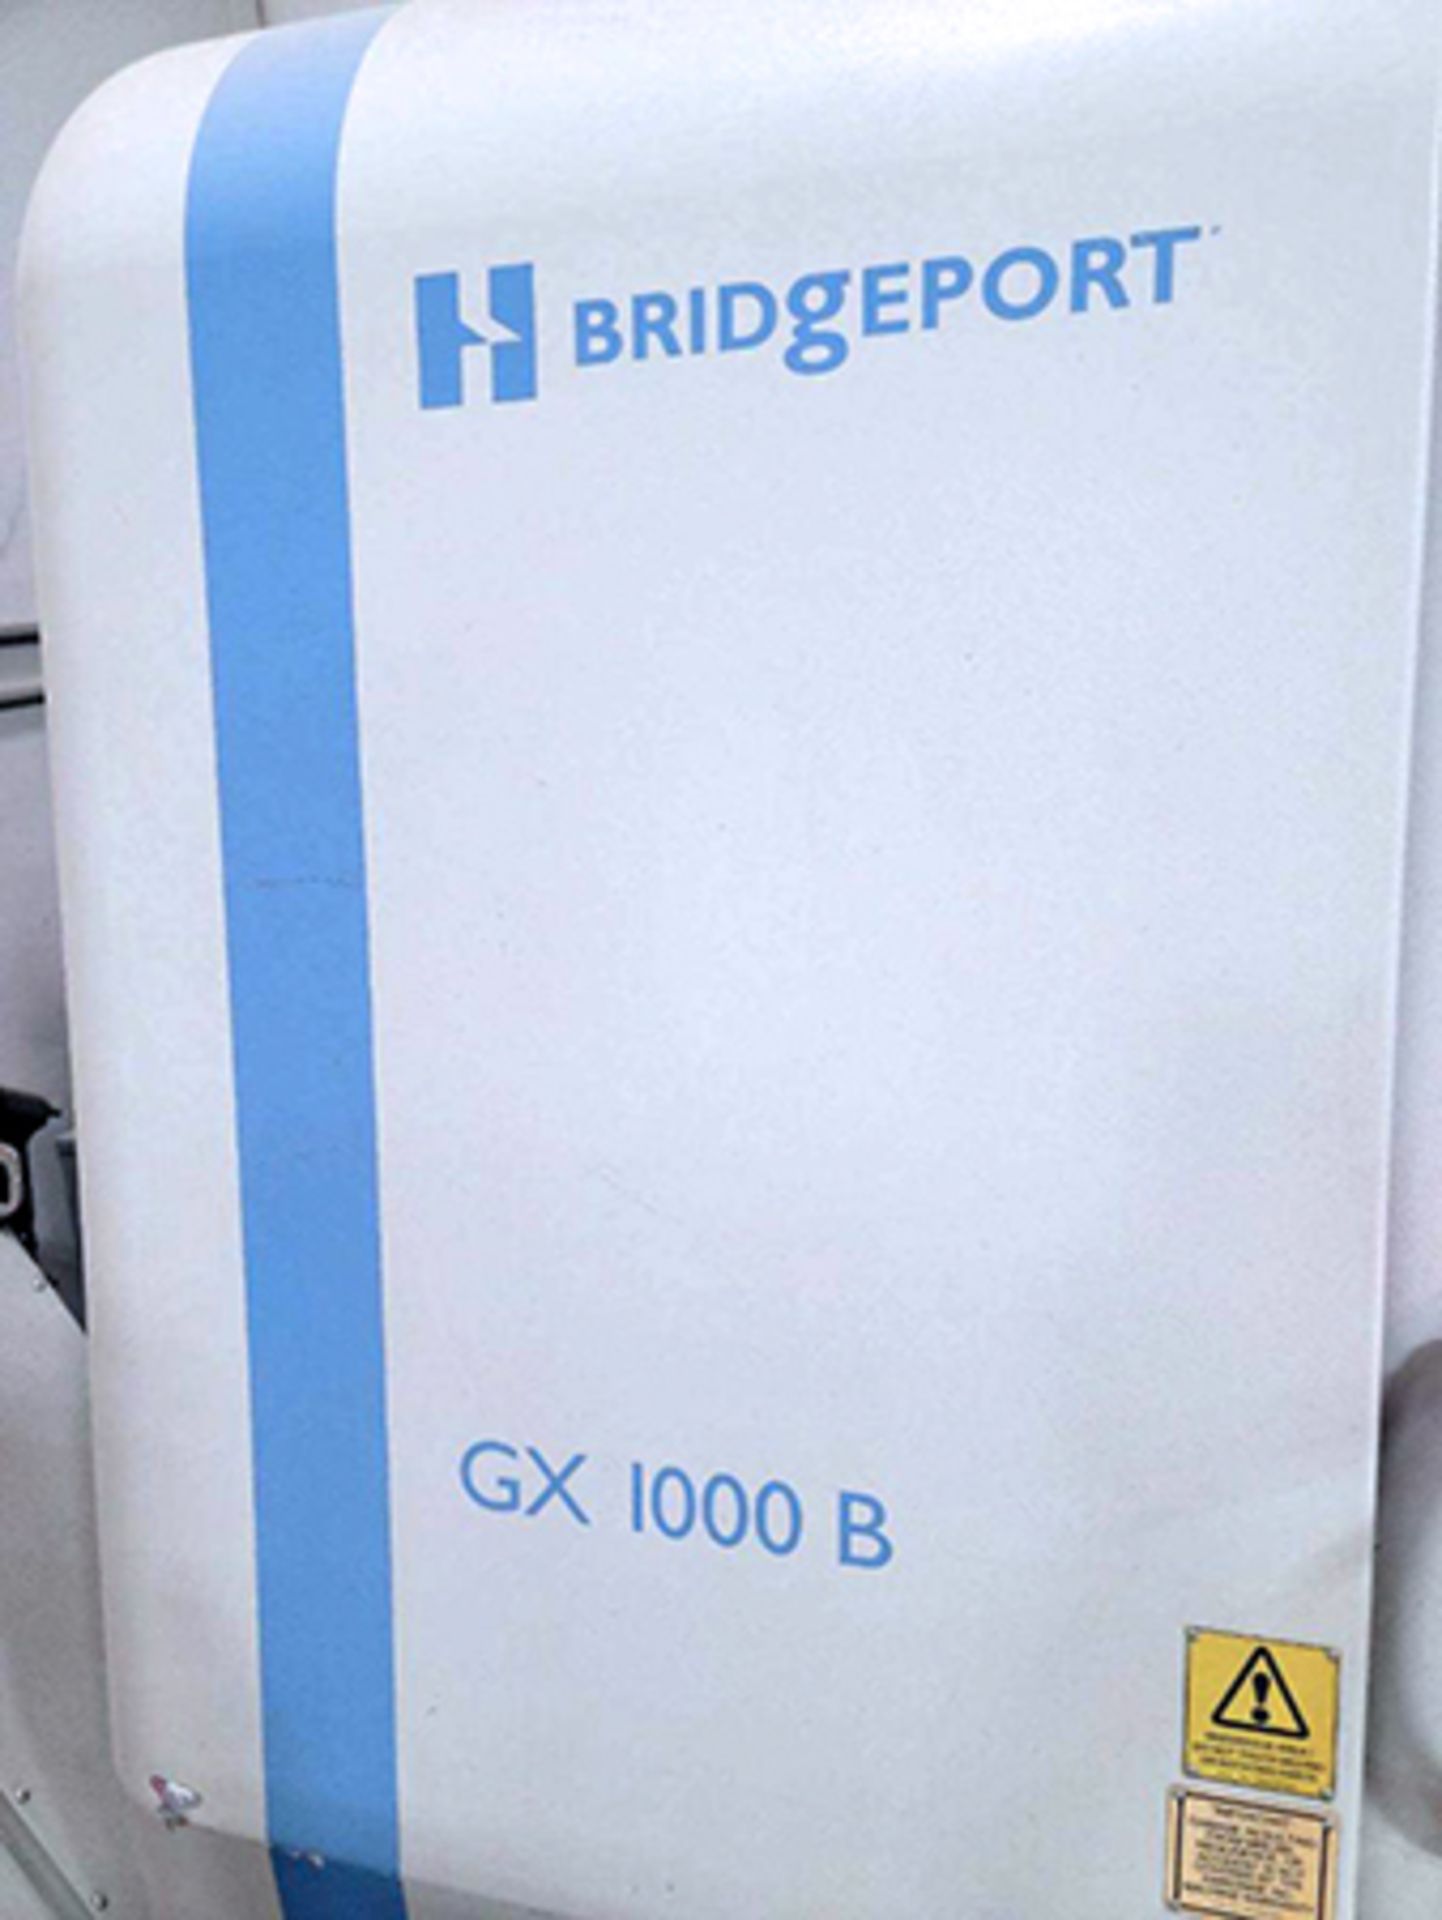 Bridgeport GX 1000 Vertical Machining Center (2005) - Image 2 of 14